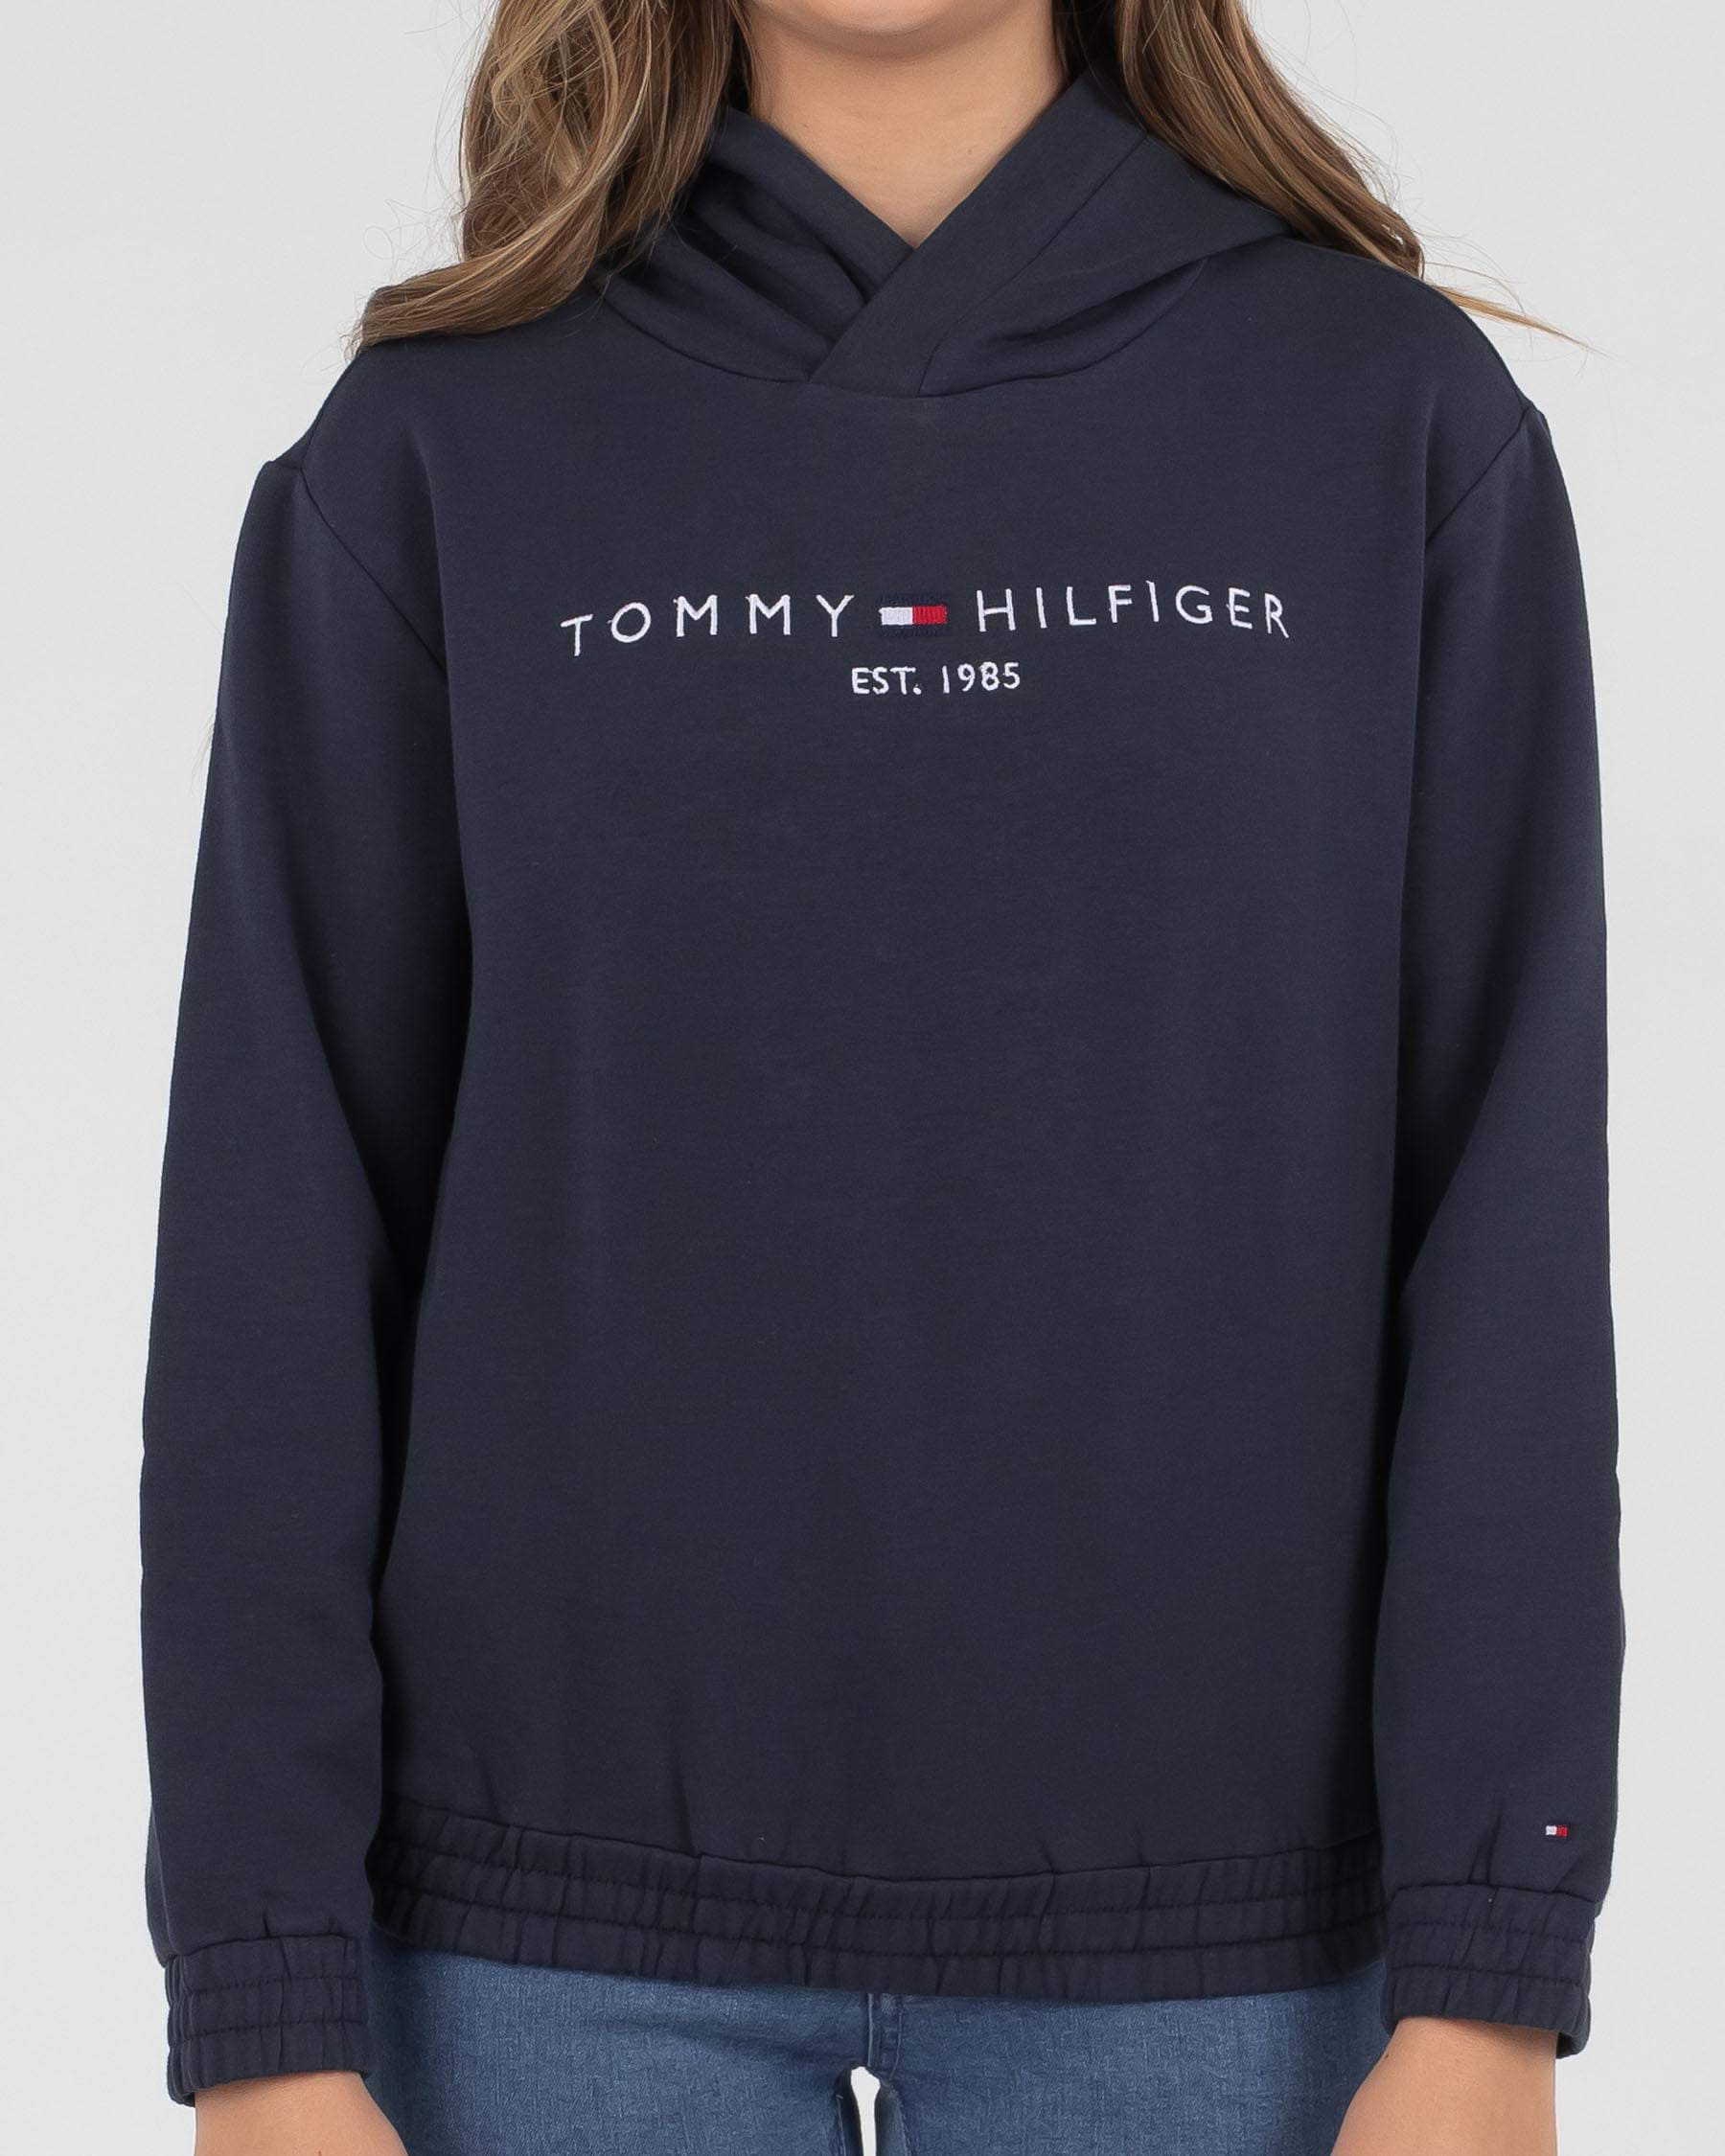 Tommy Hilfiger Girl's Essential Sweatshirt Sweater